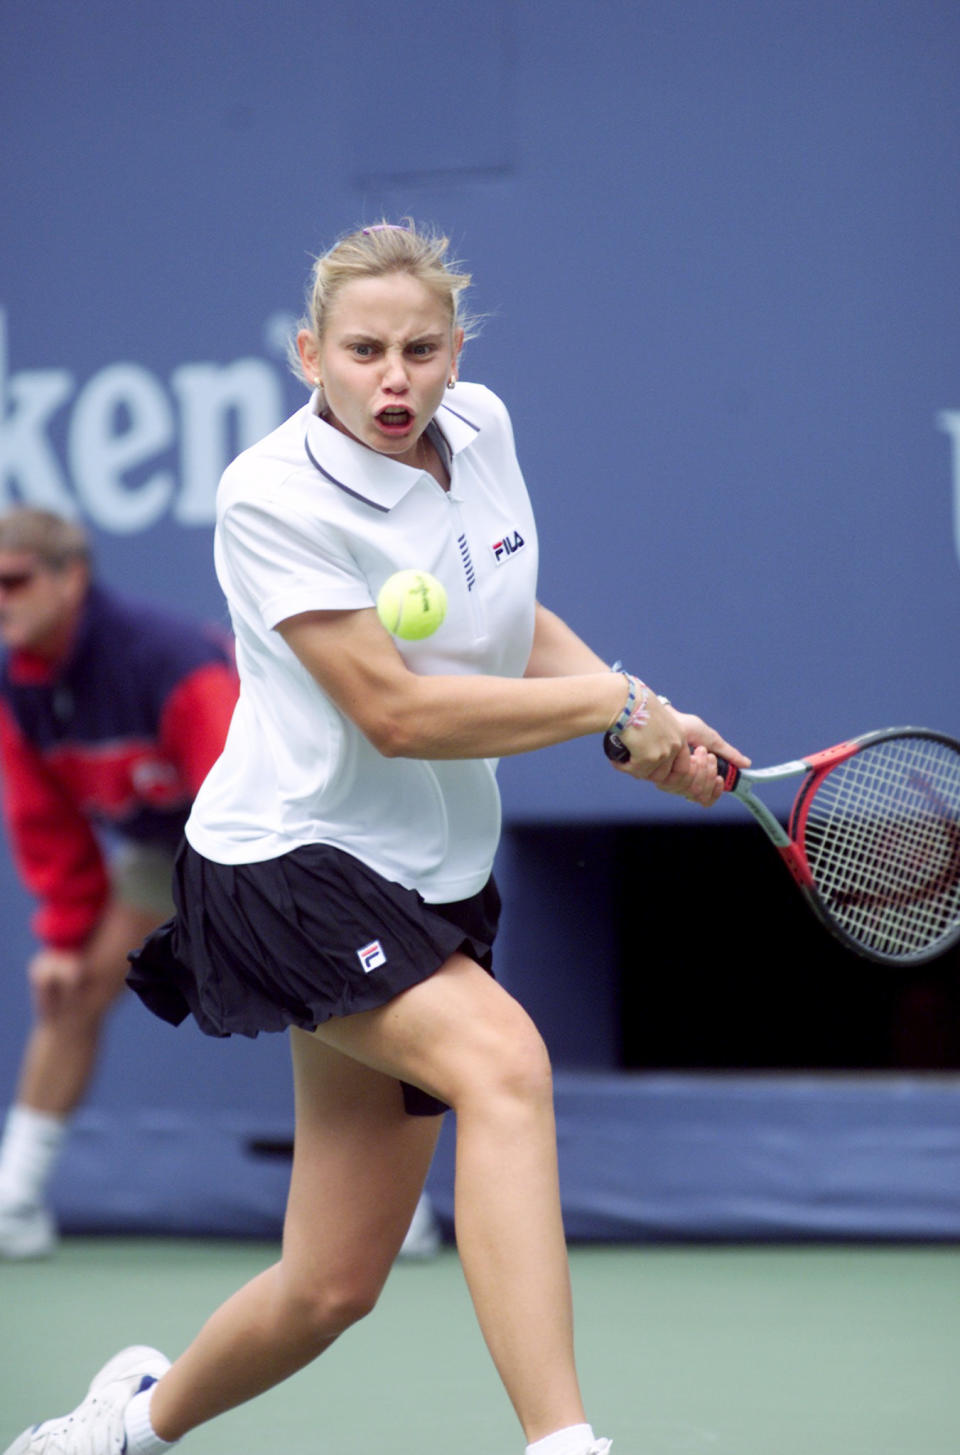 Jelena Dokic playing tennis in 1999